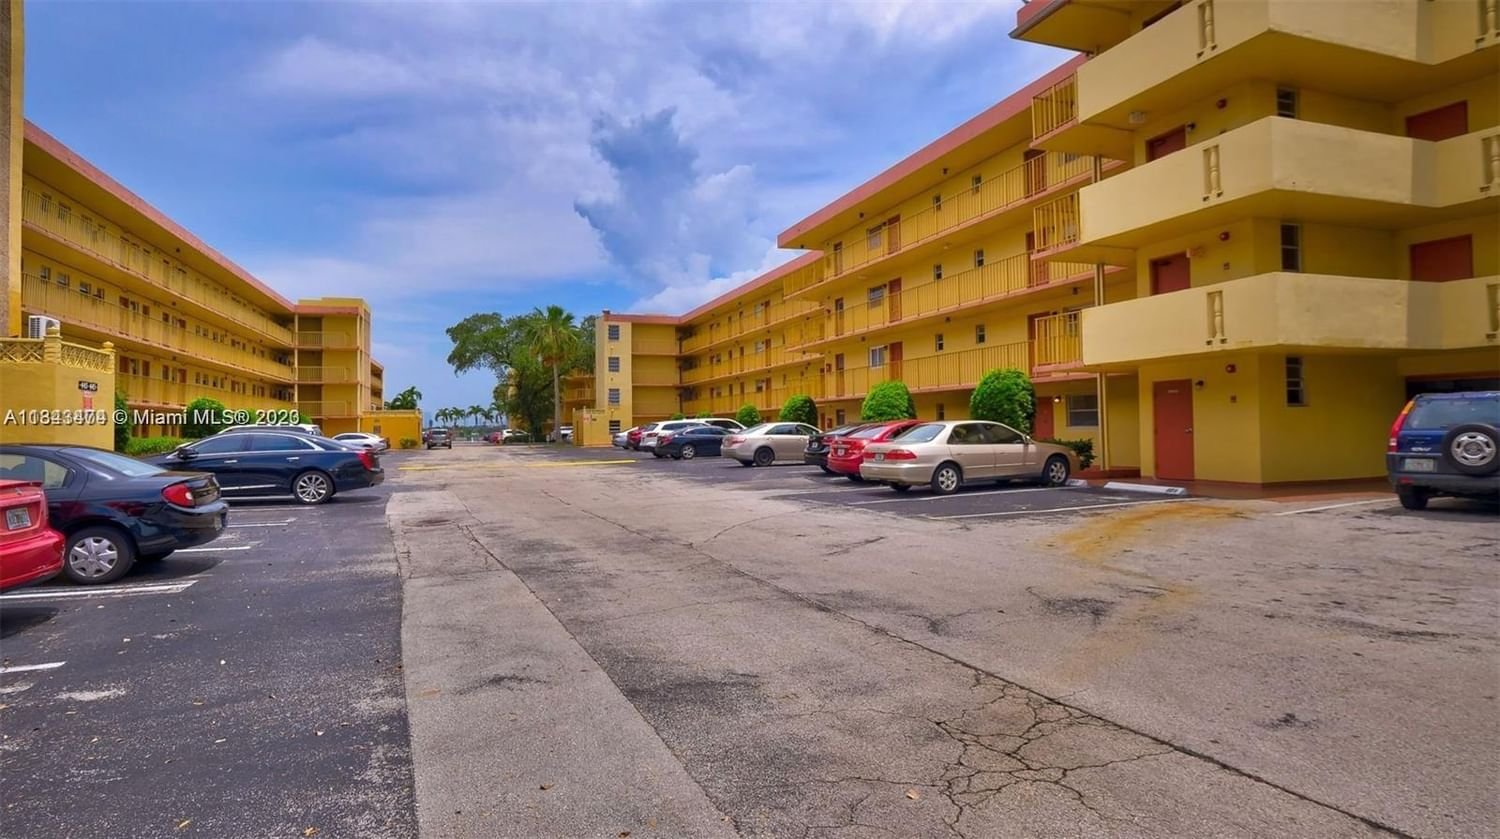 Real estate property located at 447 195th St #421, Miami-Dade County, Miami, FL